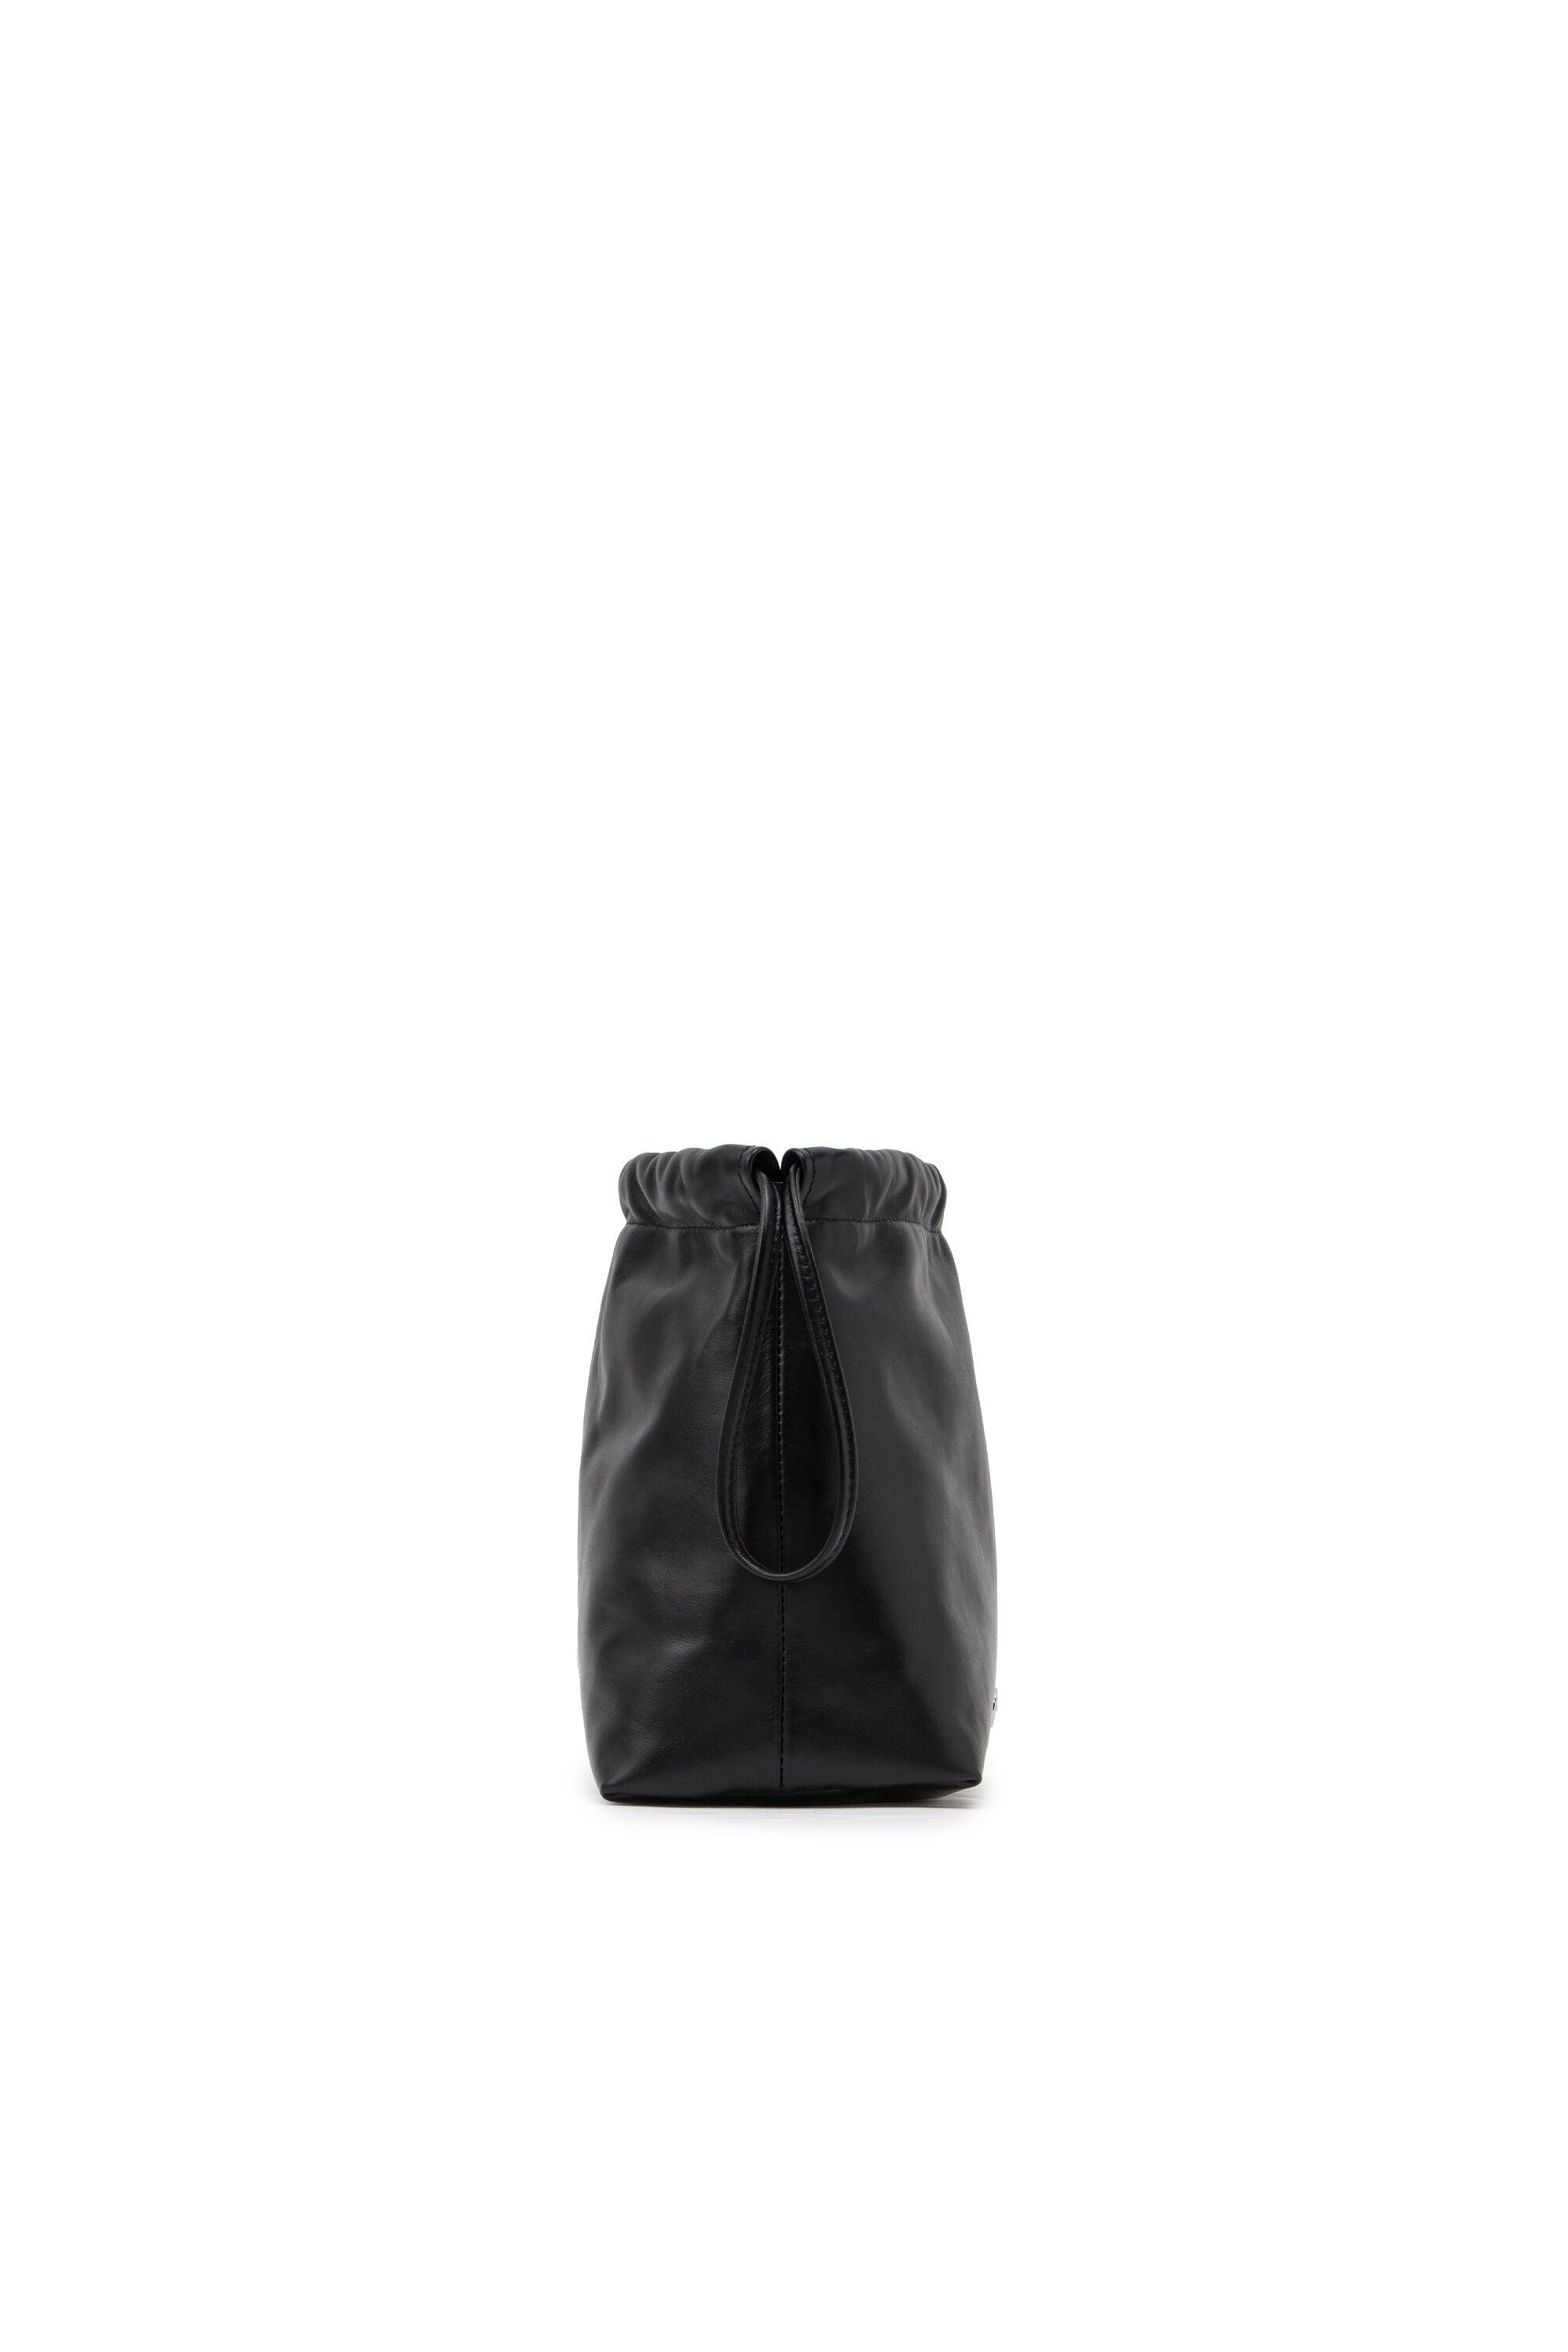 CLOU-D CROSSBODY Clou-D - Small leather bucket bag｜ブラック 